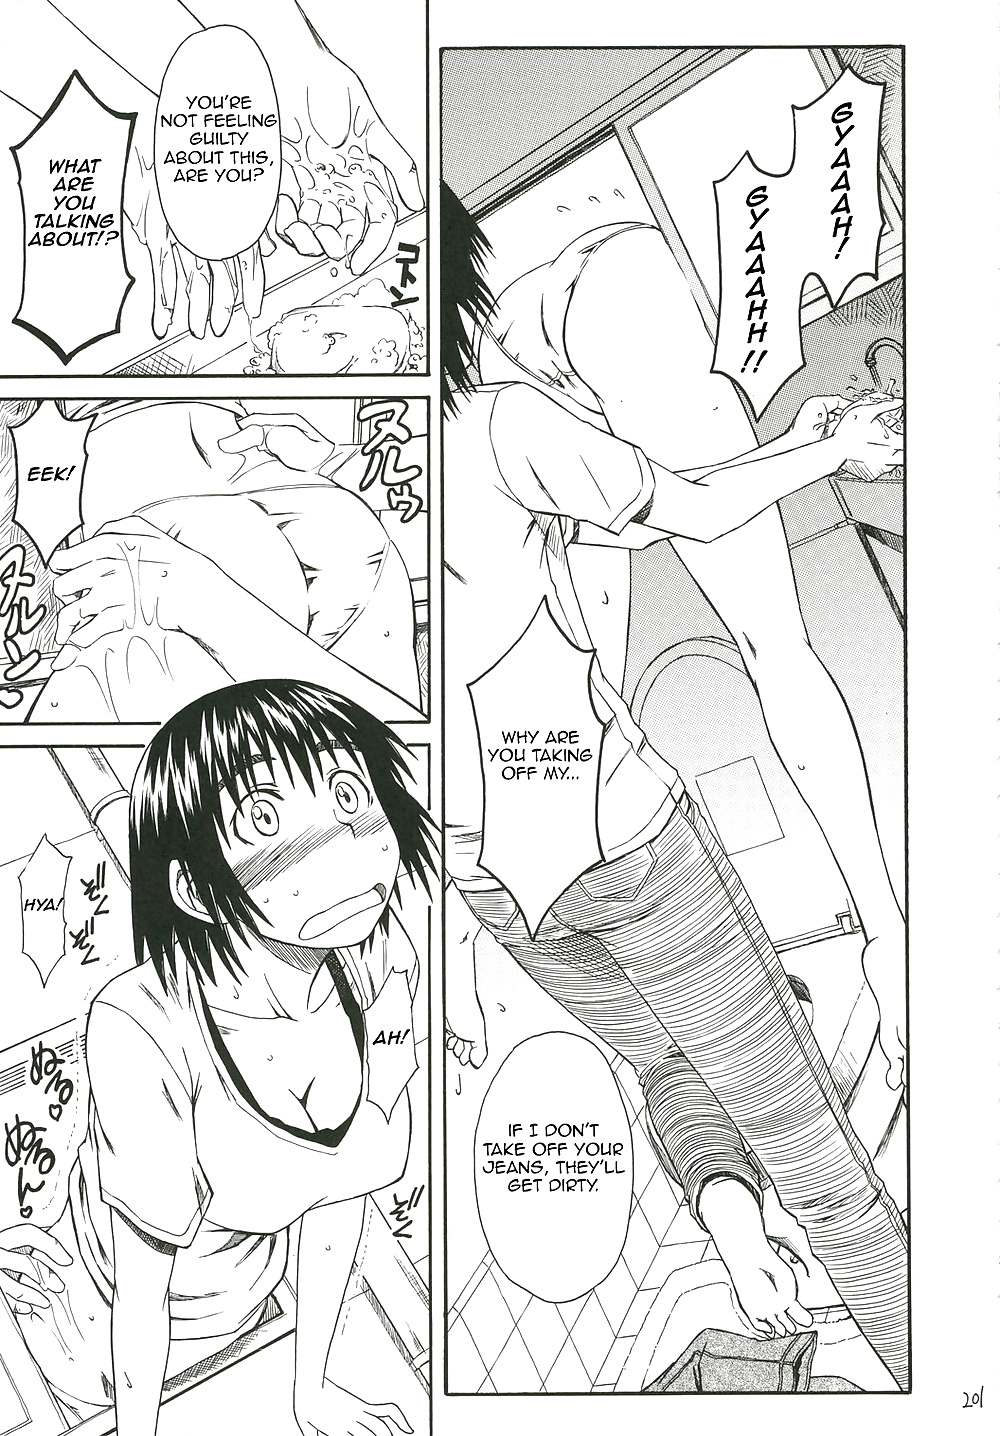 (Manga) Window girl #28805722